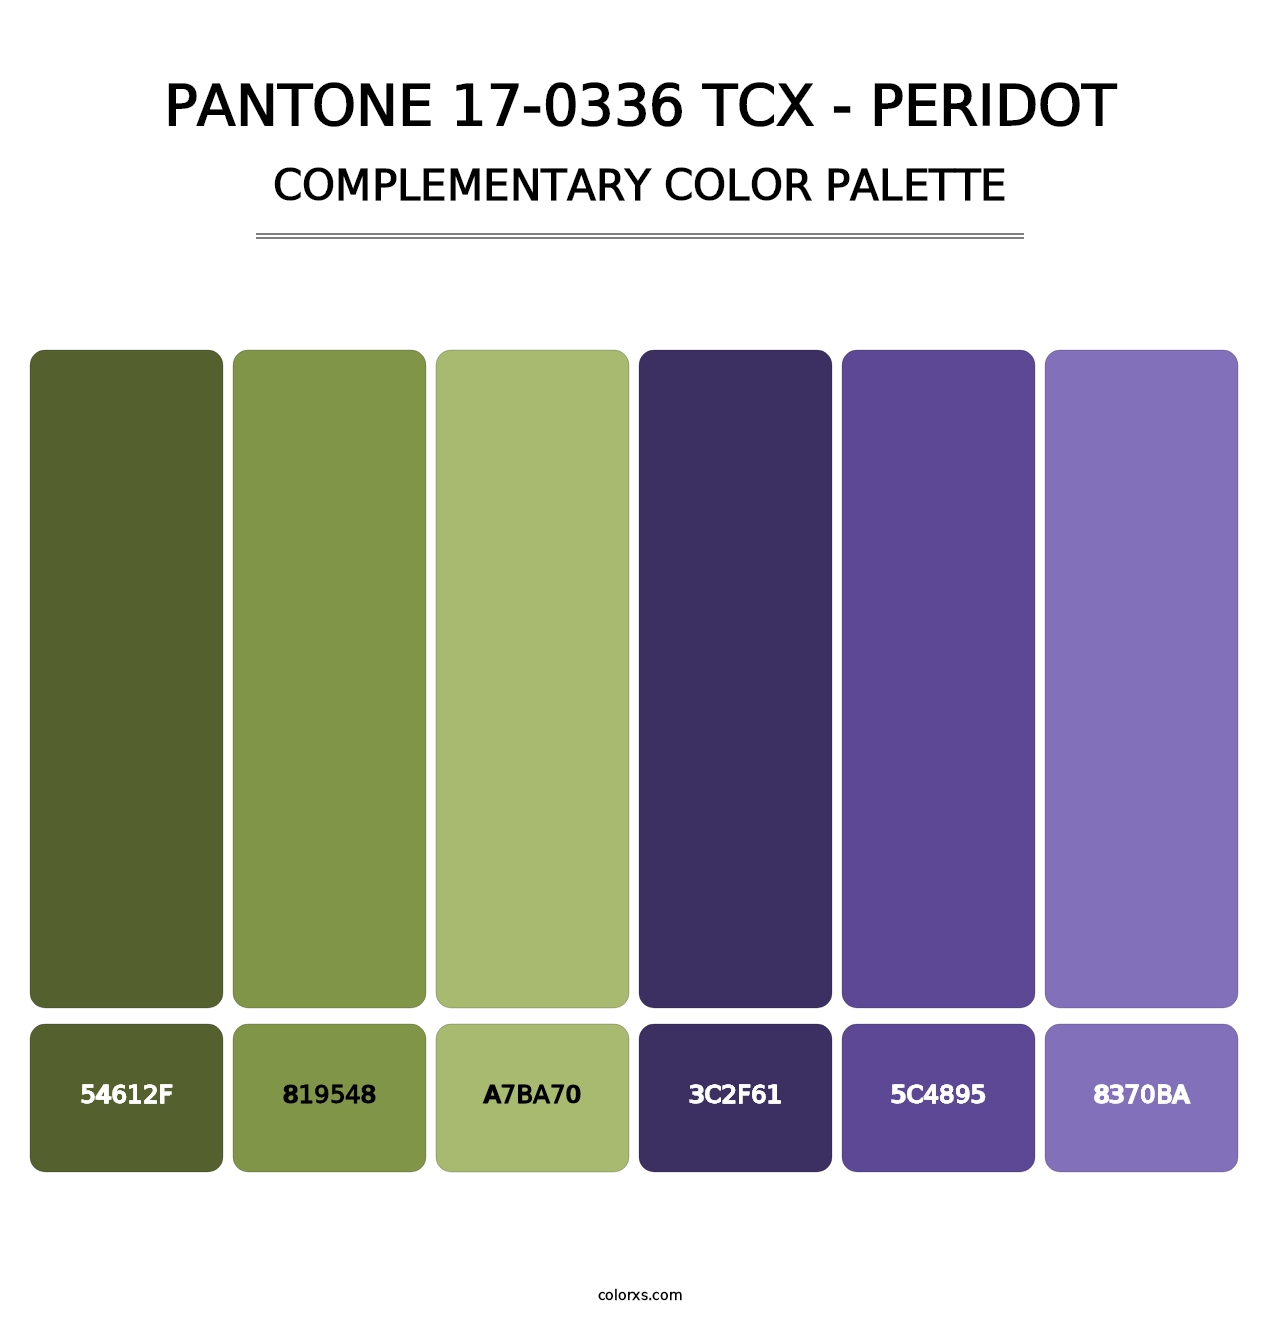 PANTONE 17-0336 TCX - Peridot - Complementary Color Palette